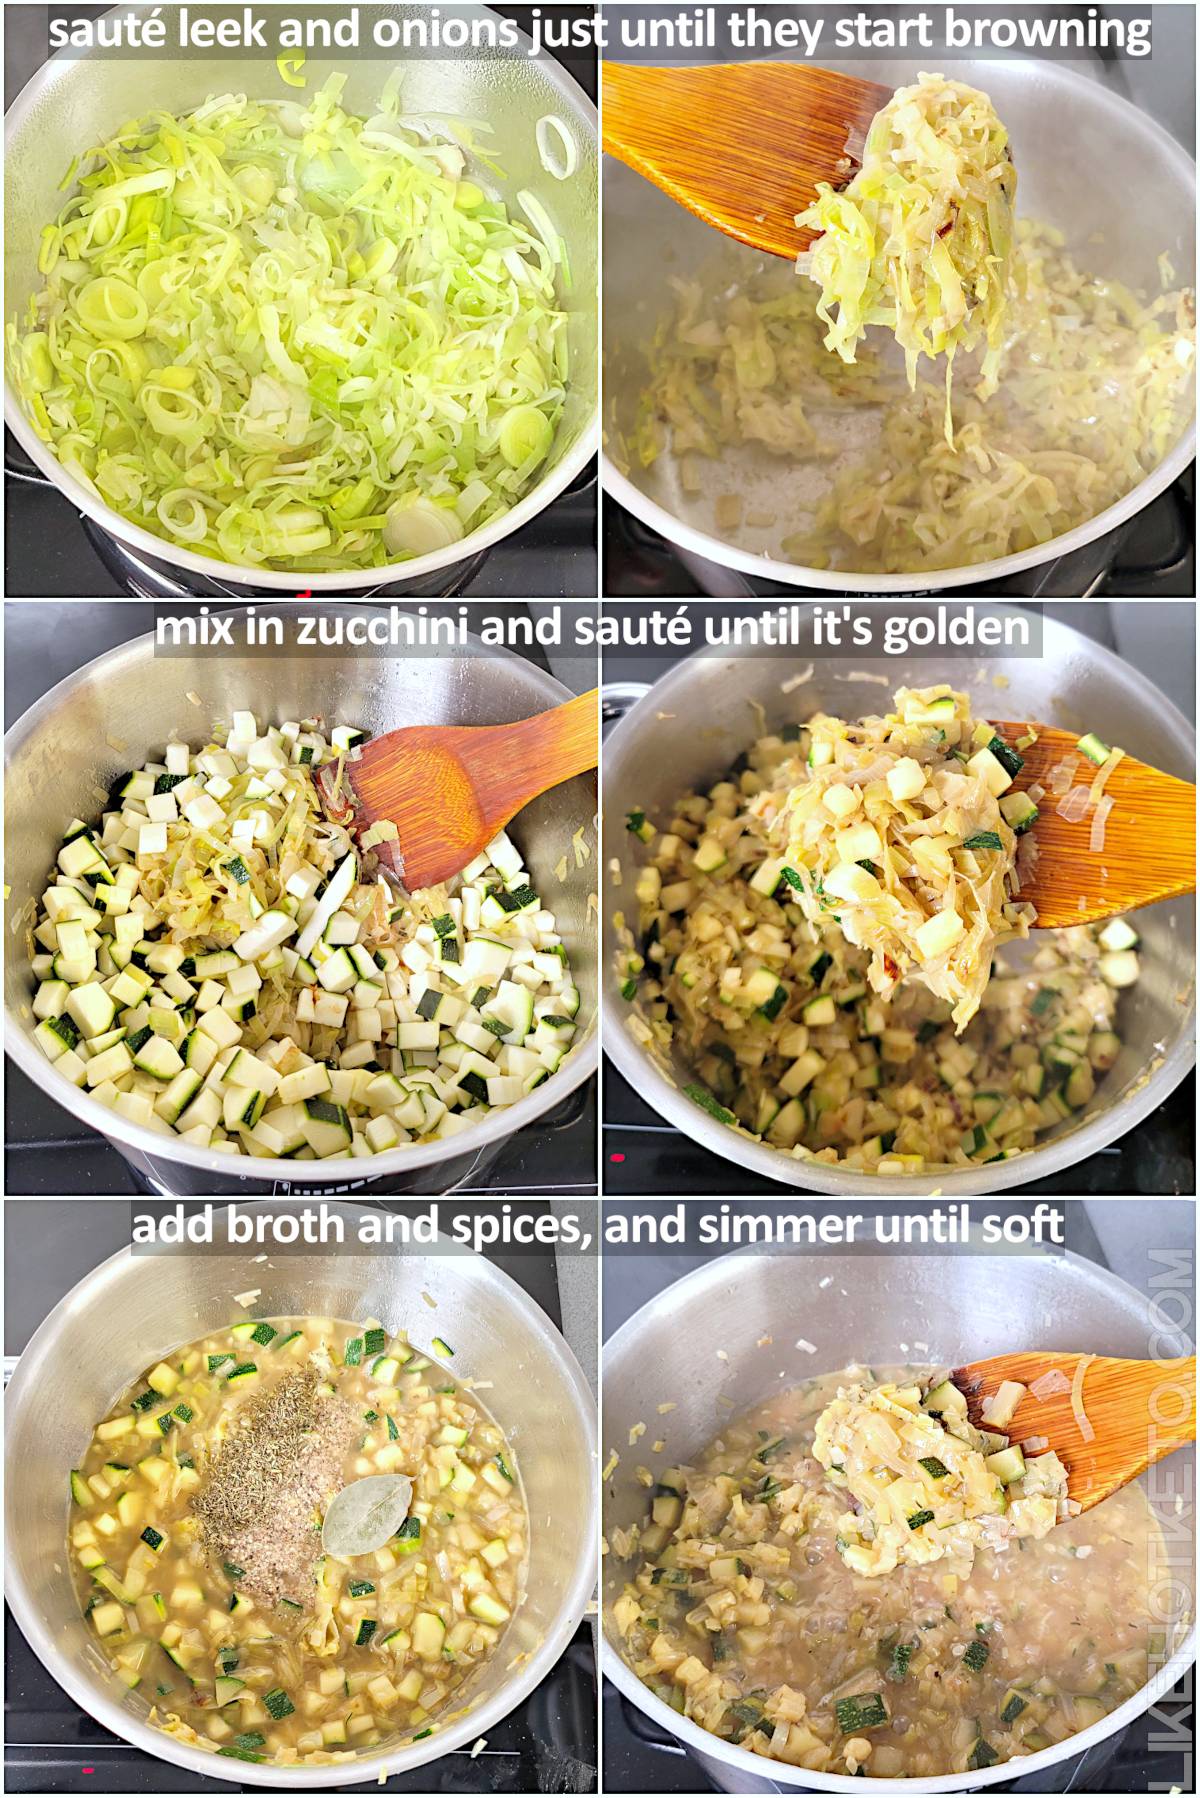 Steps of making the keto Irish leek soup, sautéing the veggies and adding the broth.